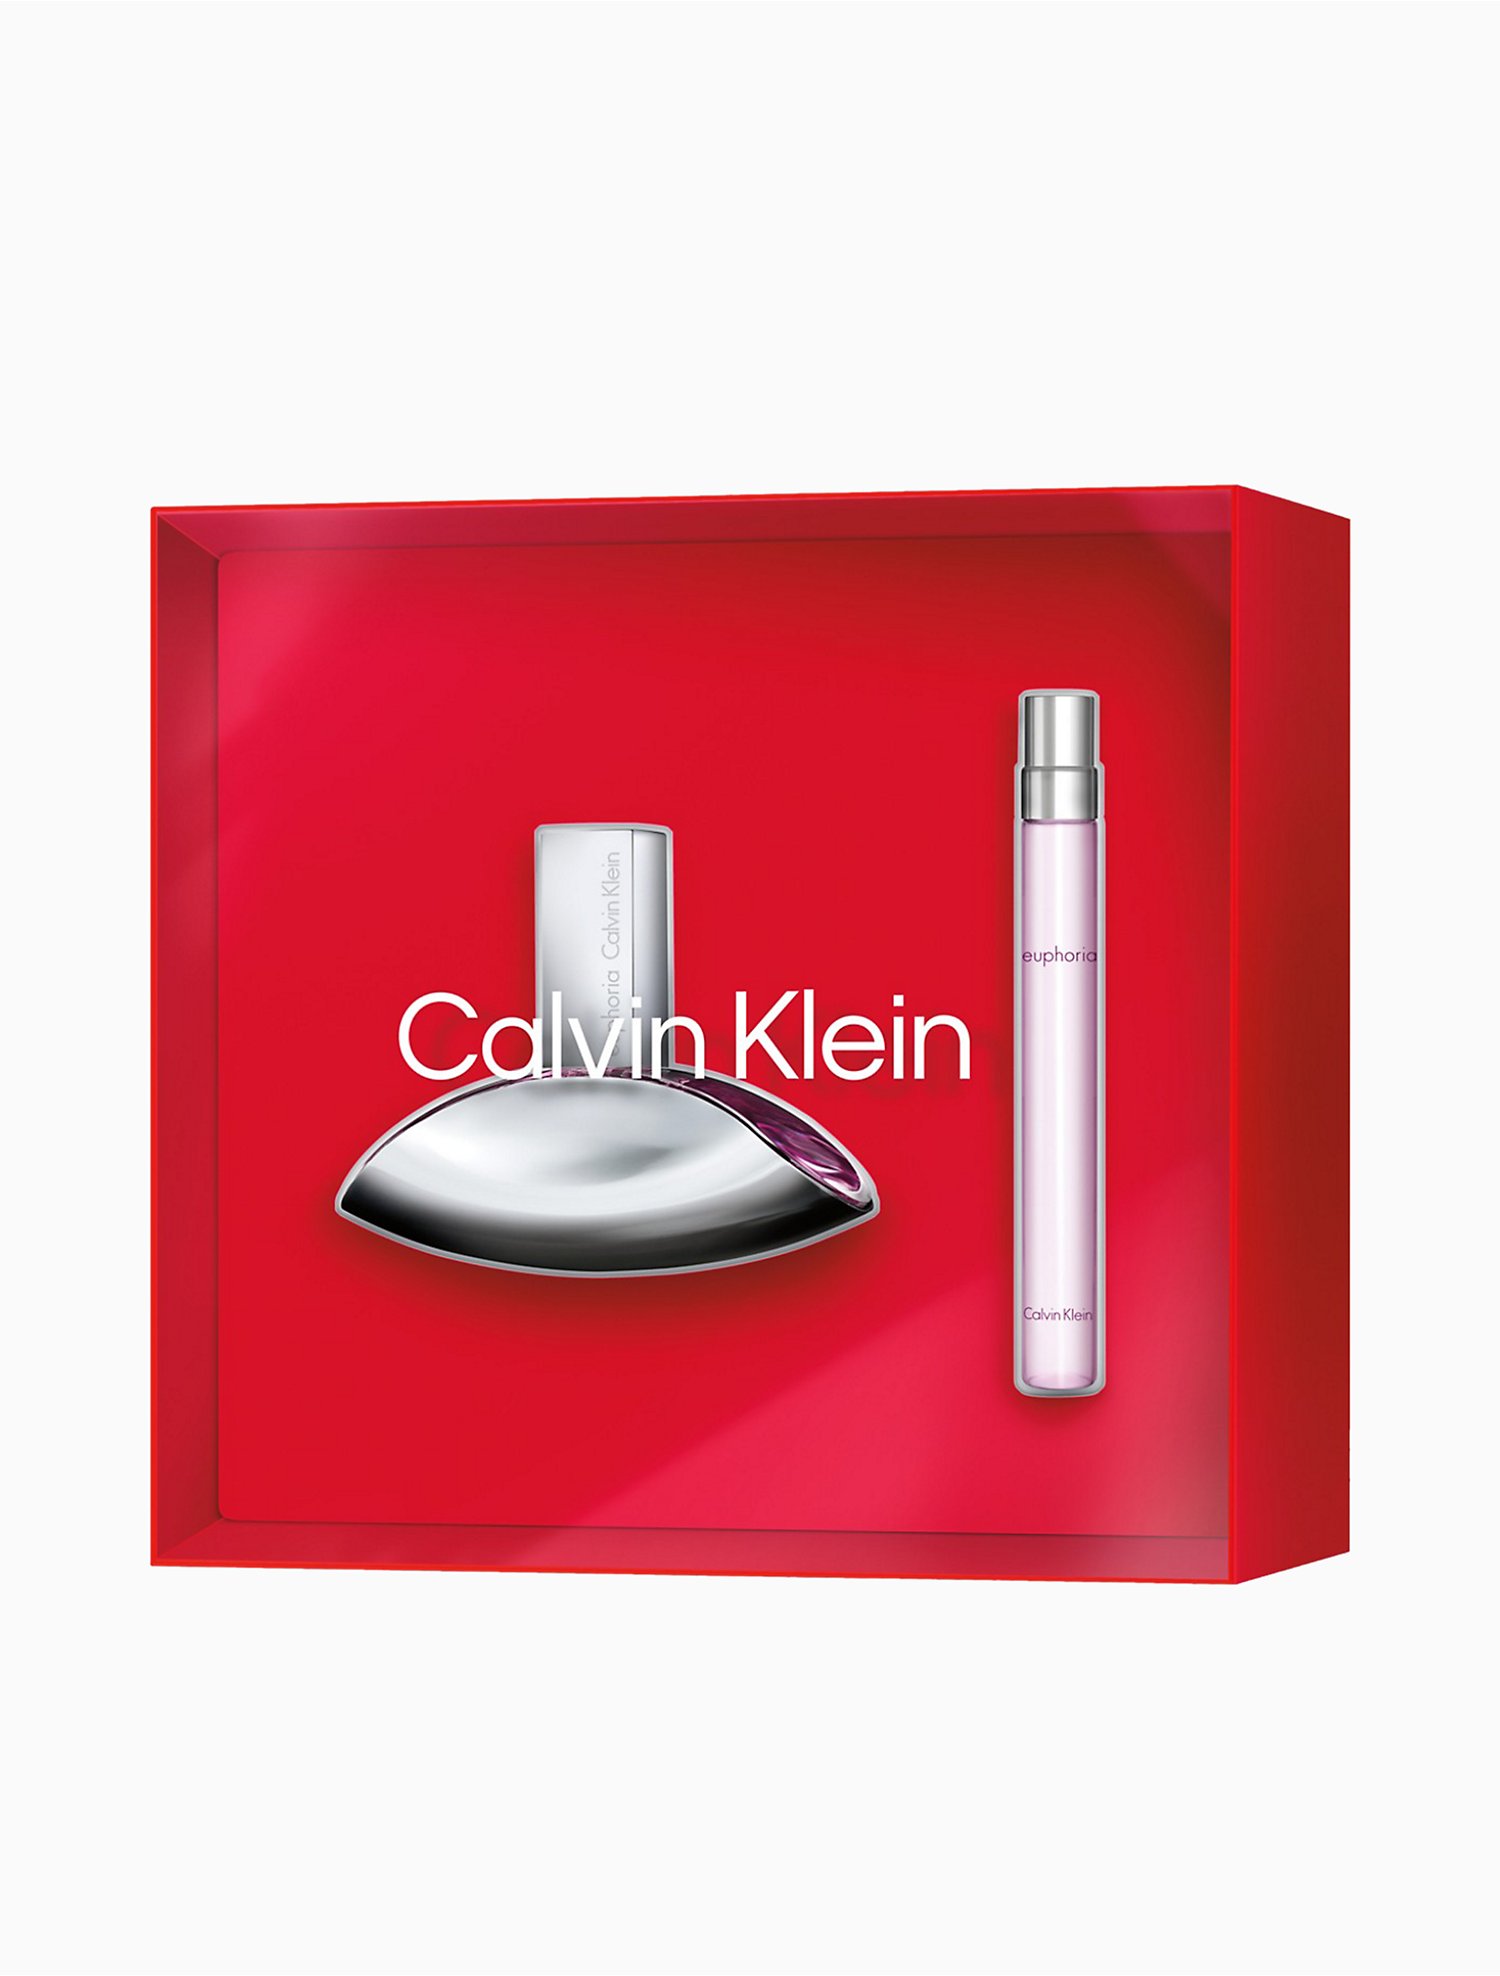 Euphoria Eau de Parfum Gift Set | Calvin Klein